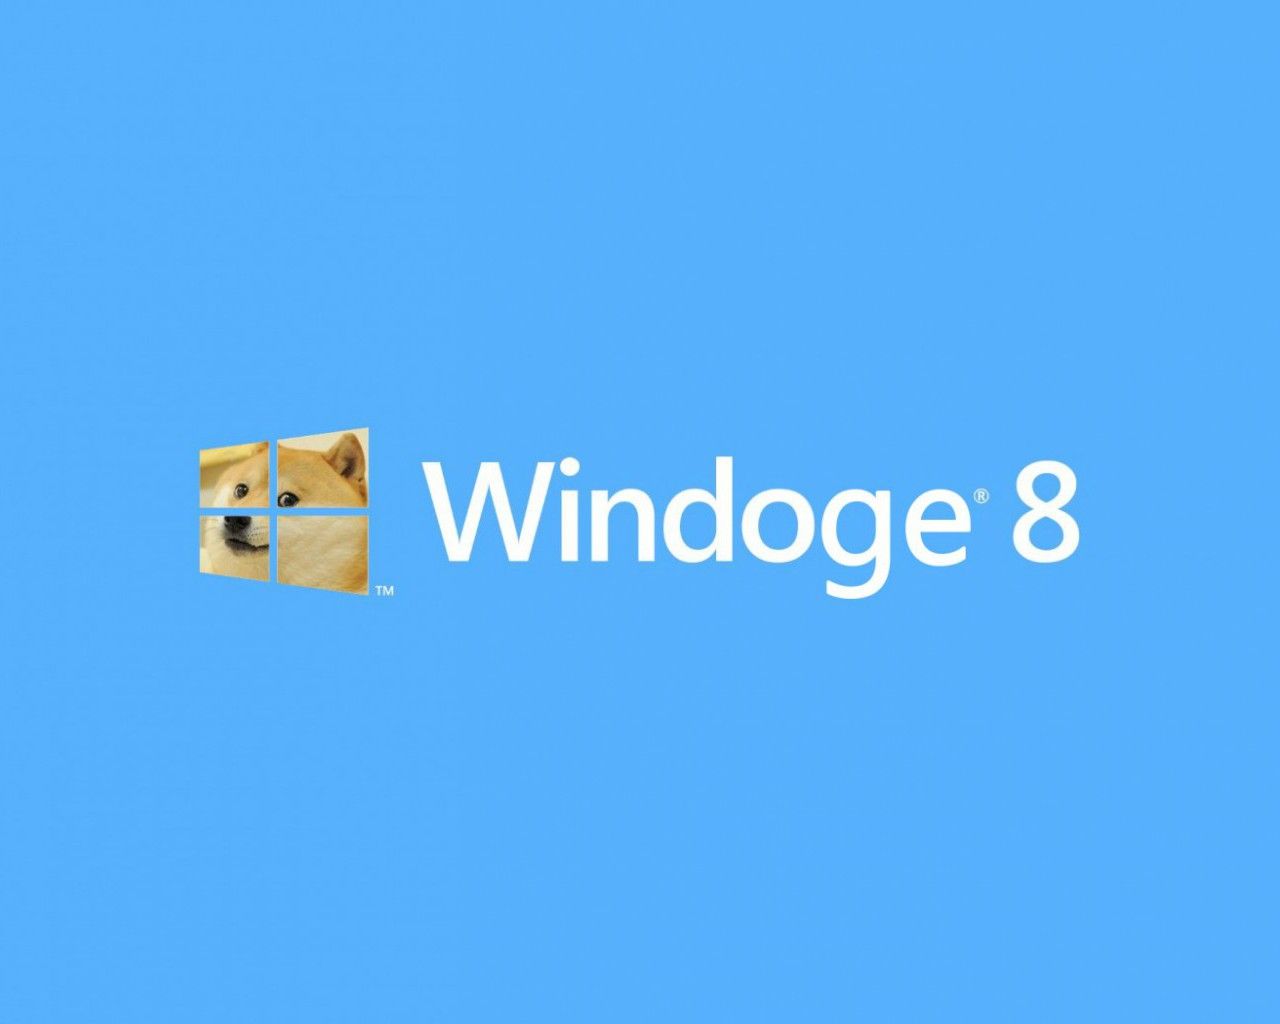 Download 1280x1024 Windoge 8 DOGE Meme Wallpaper